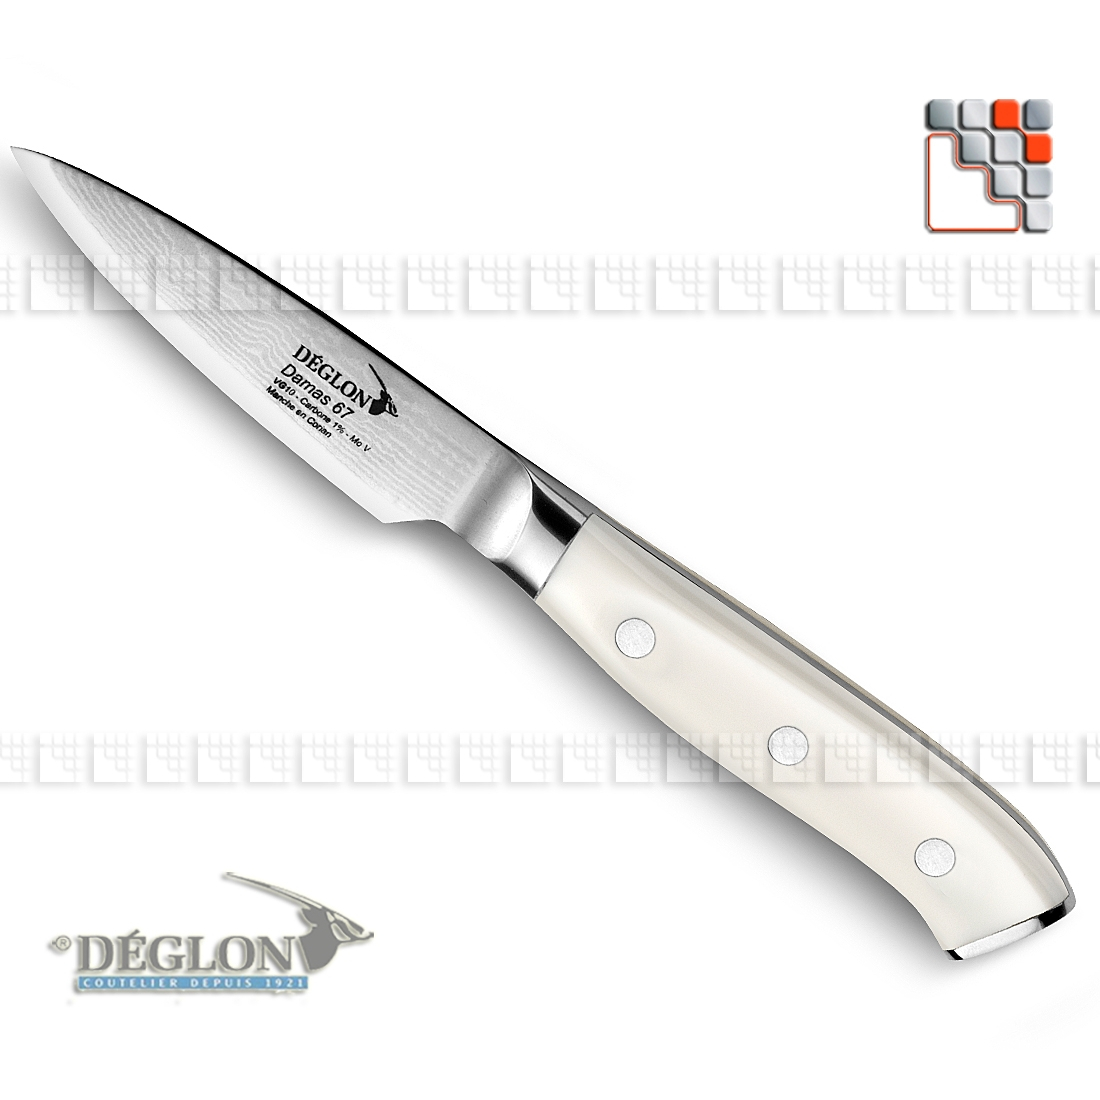 designvagabond: deglon knives